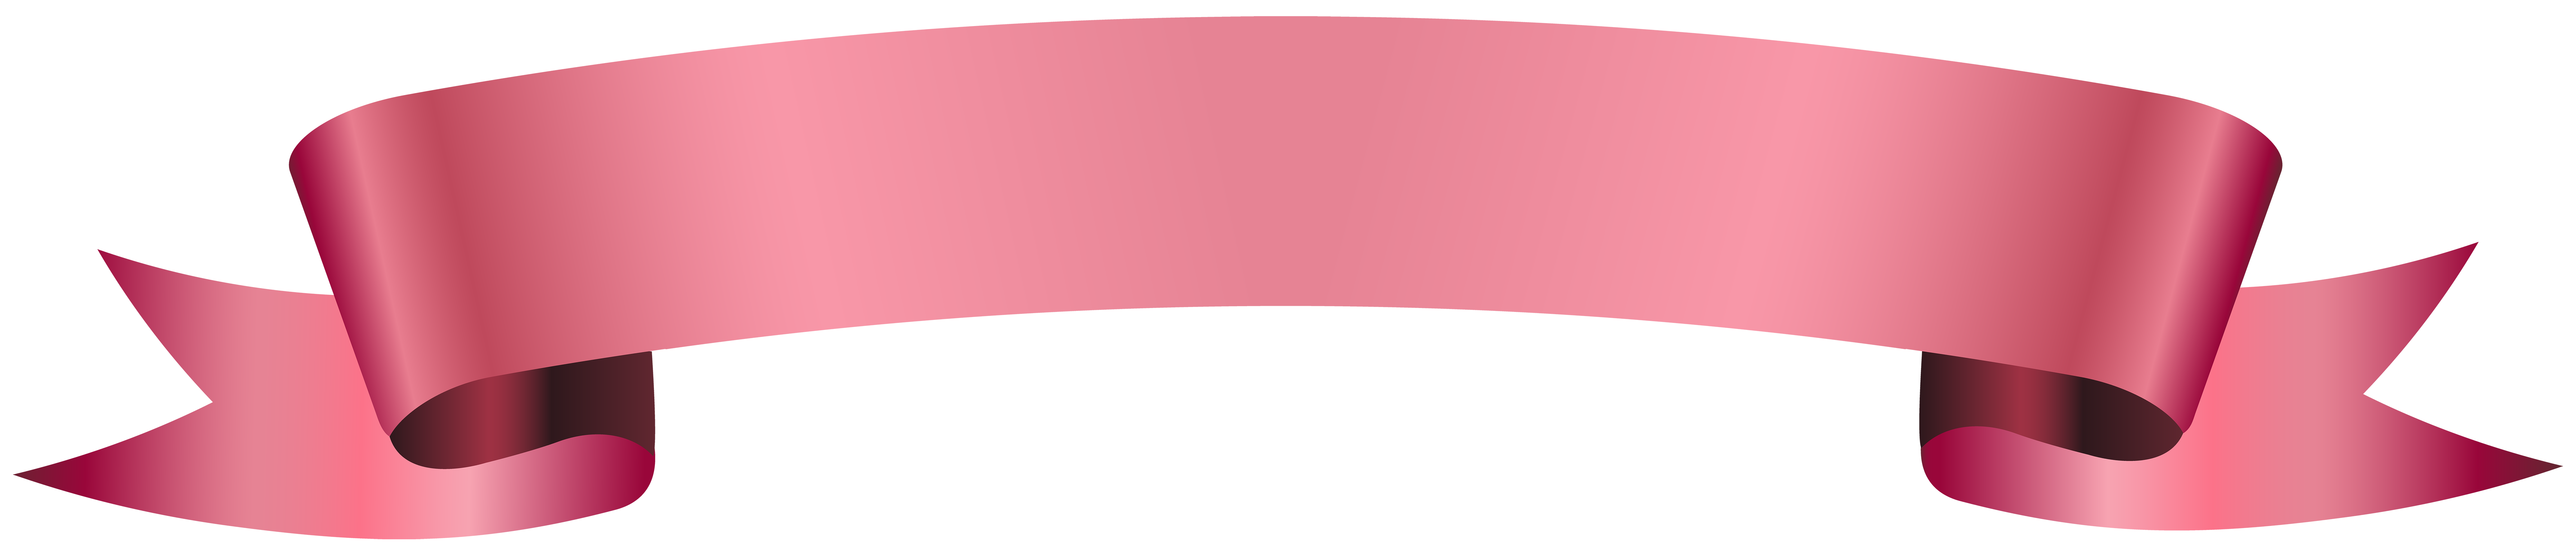 clipart banner pink ribbon